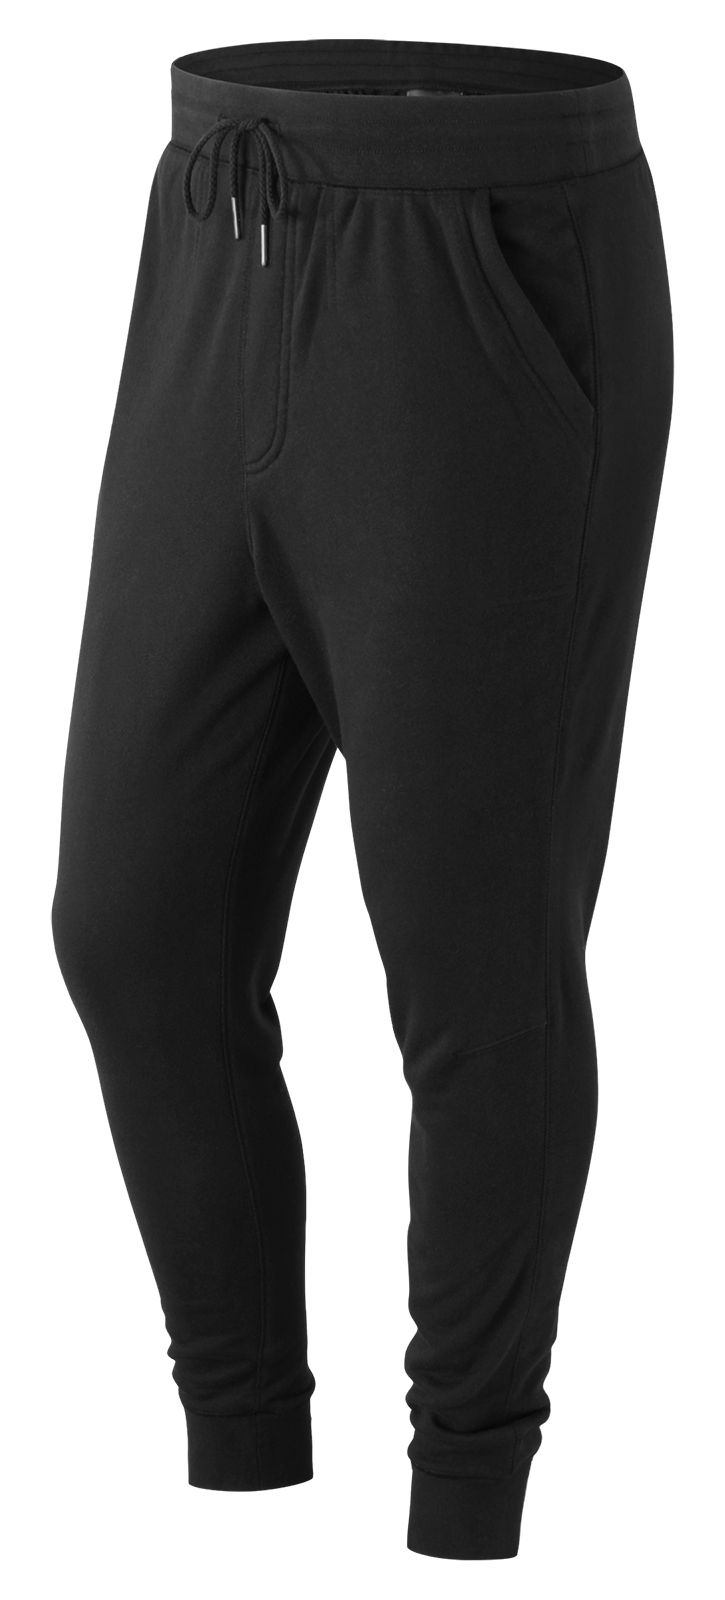 Classic Sweatpant - Men's 53514 - Pants, Lifestyle - New Balance